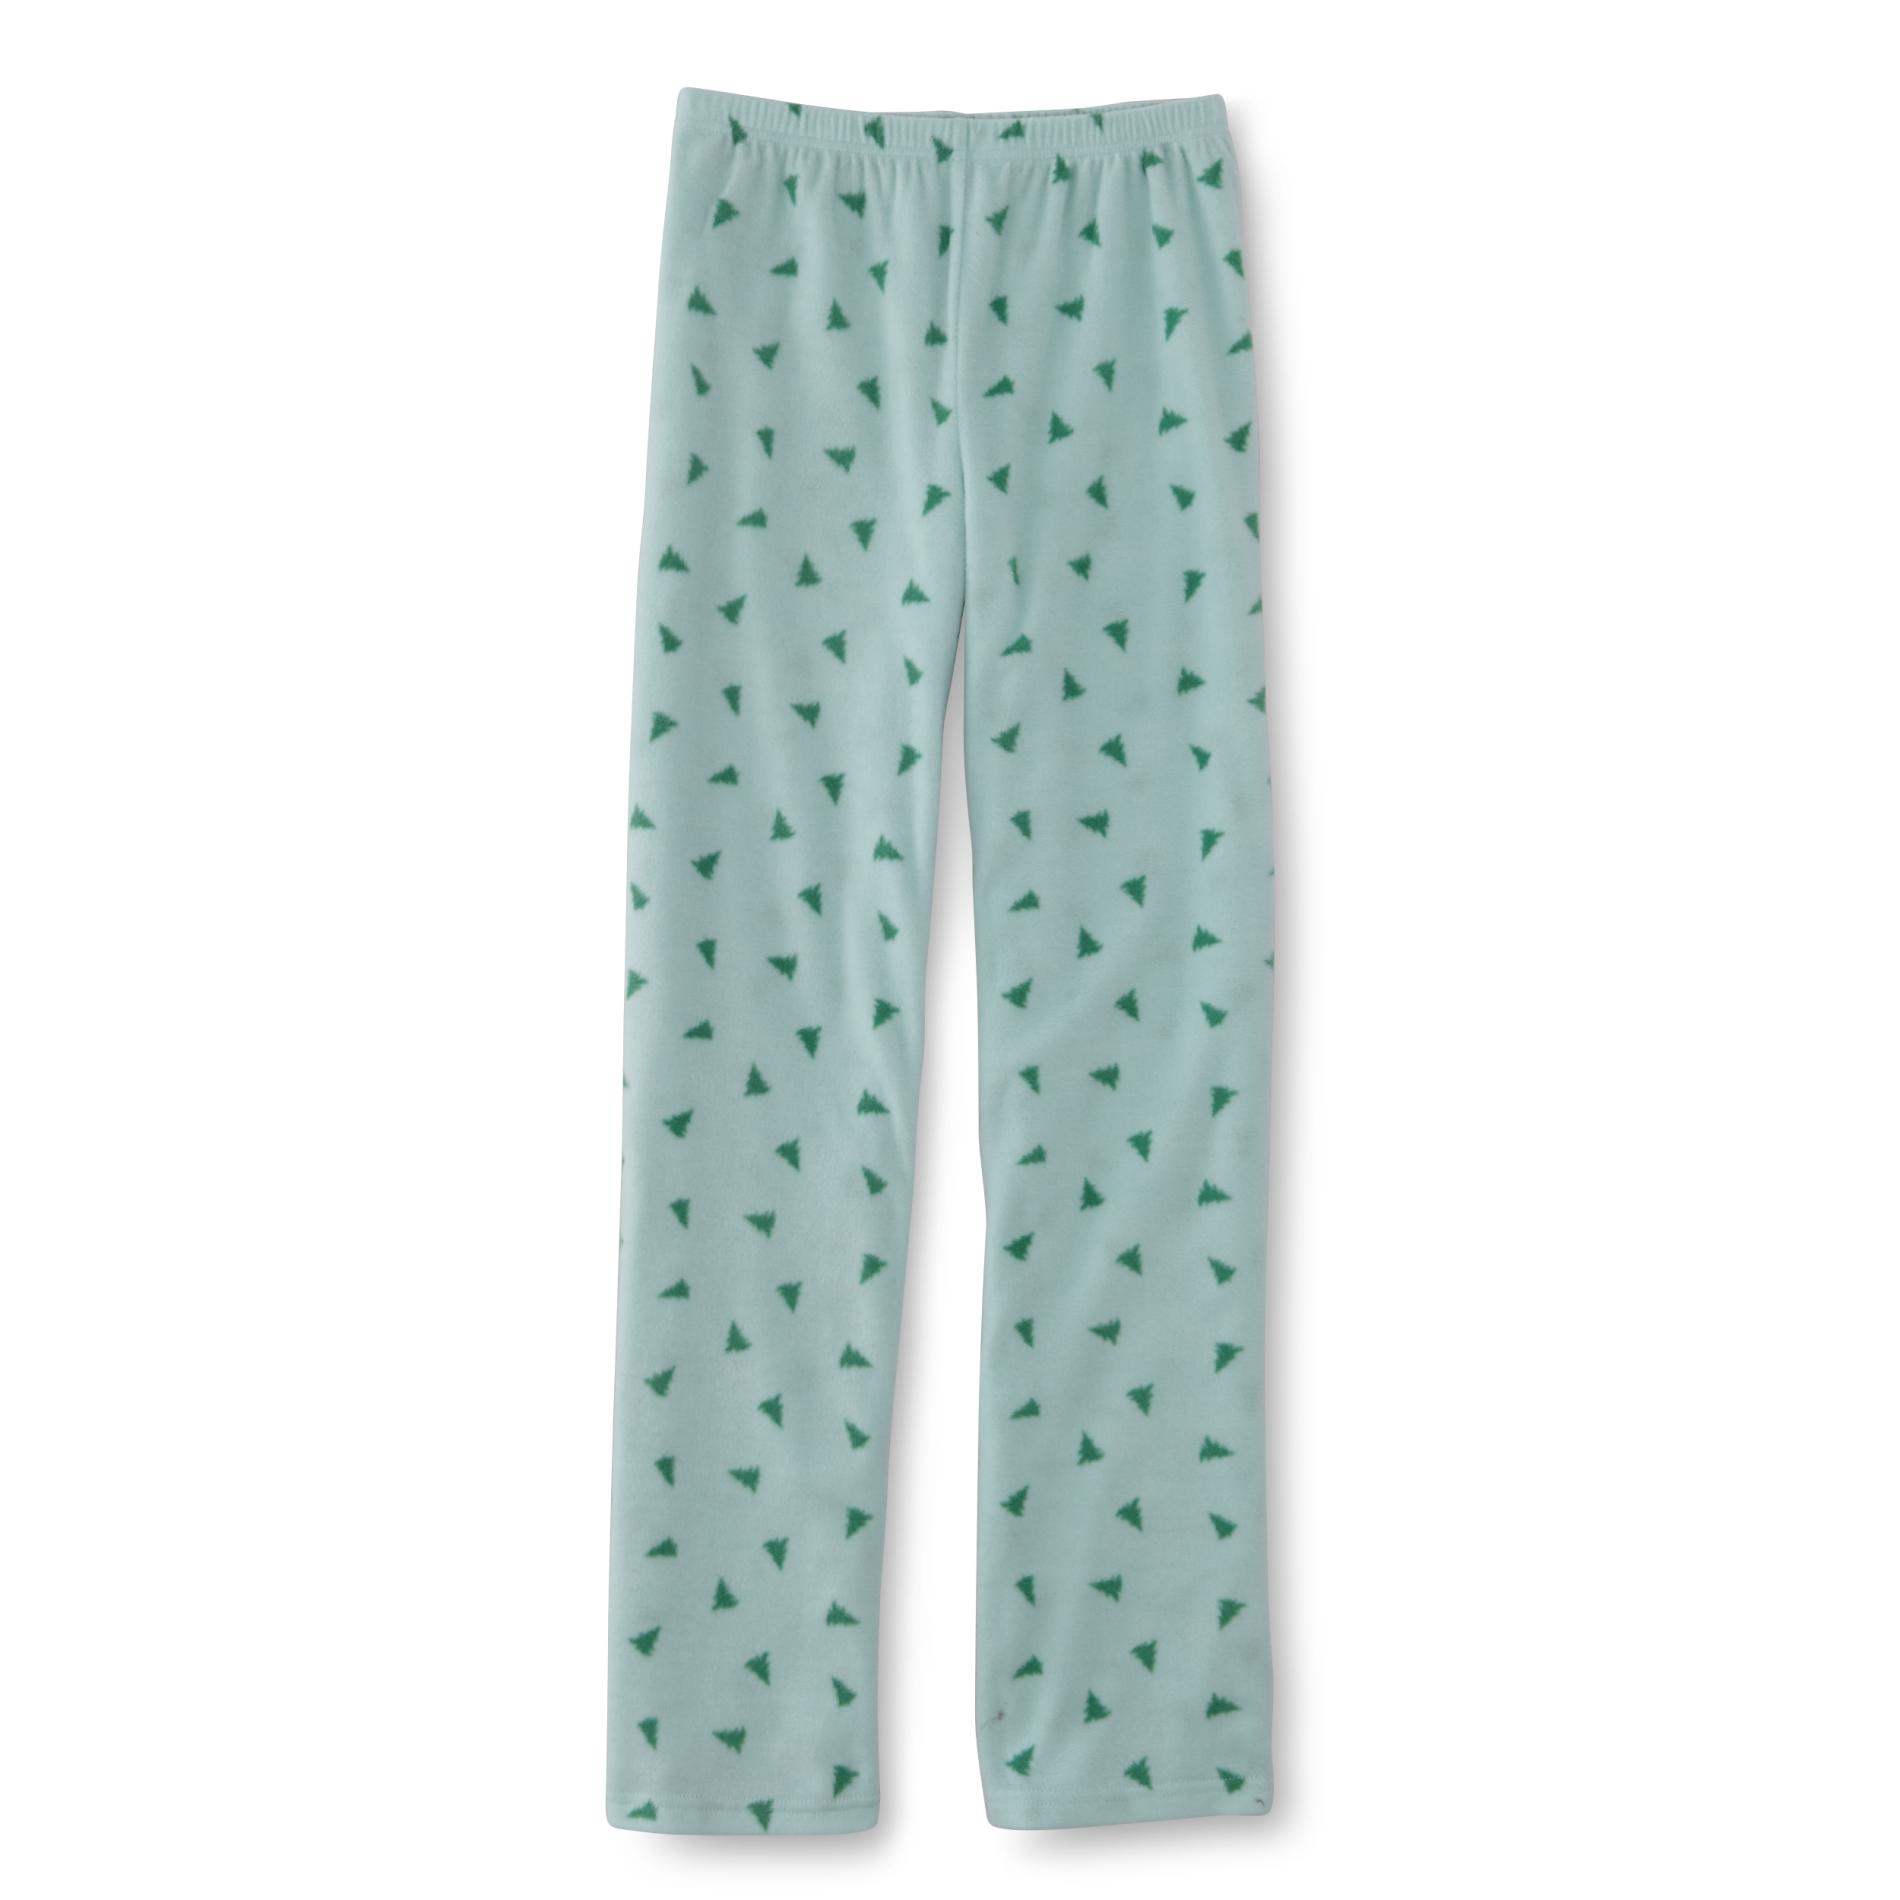 Women's Fleece Pajama Pants - Pine Trees